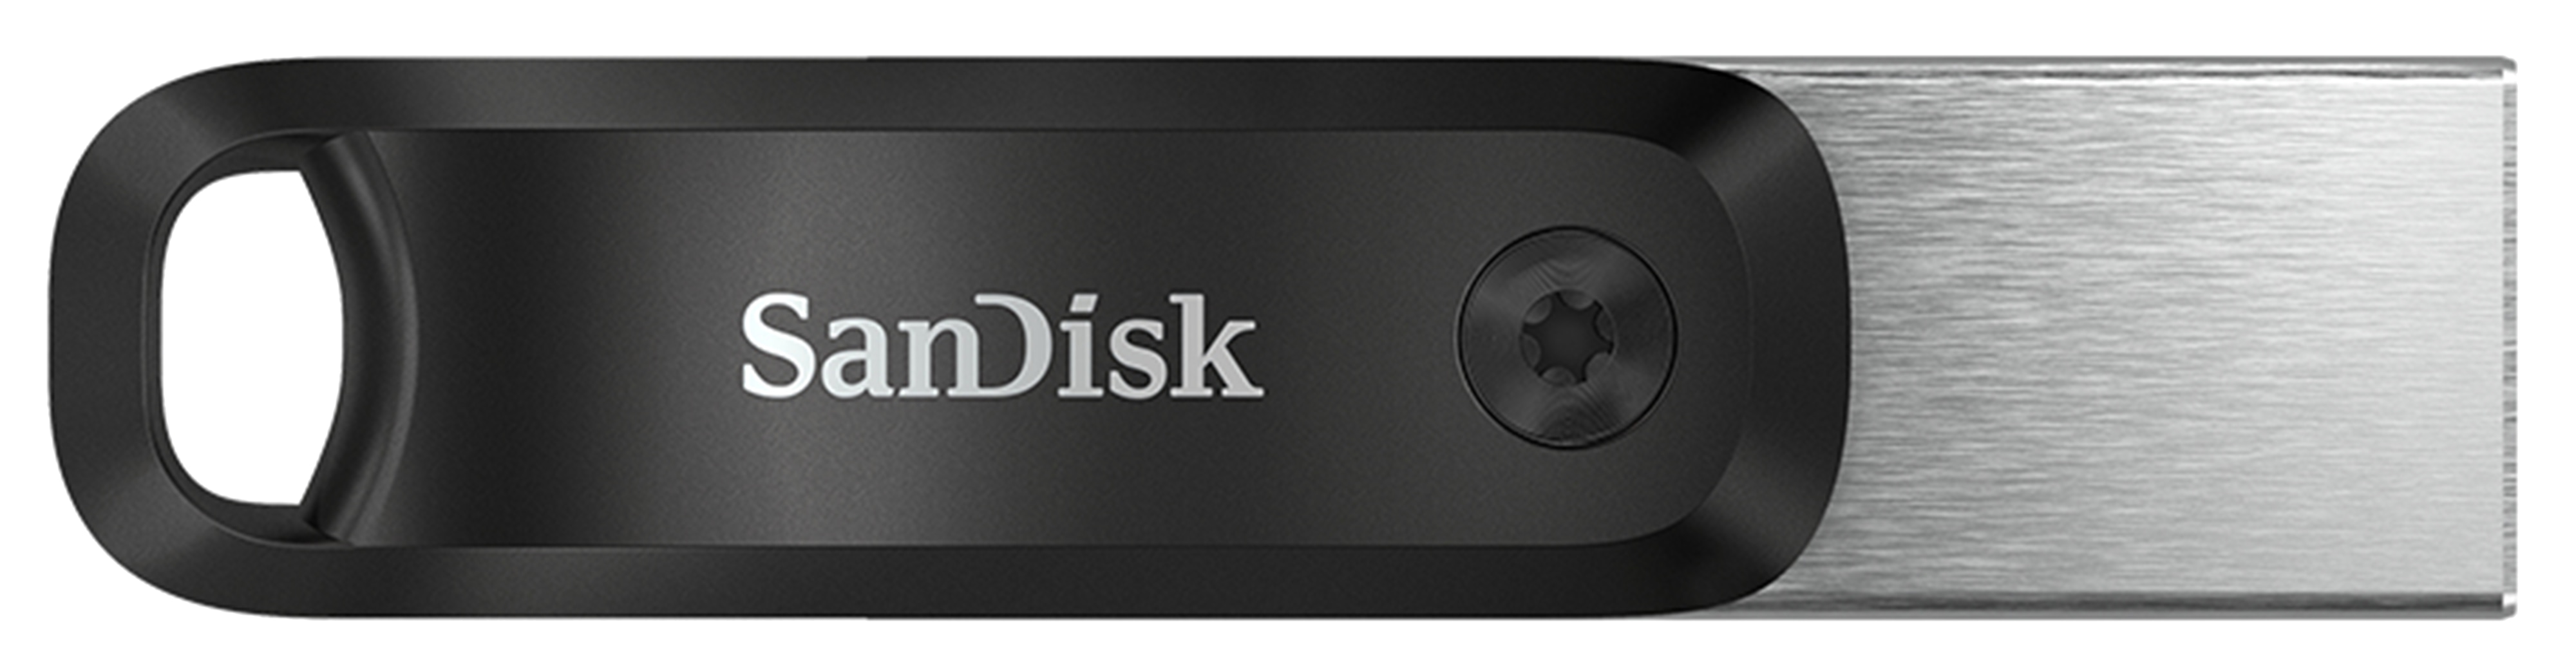 SANDISK USB 3.0 Stick iXpand Go 256GB